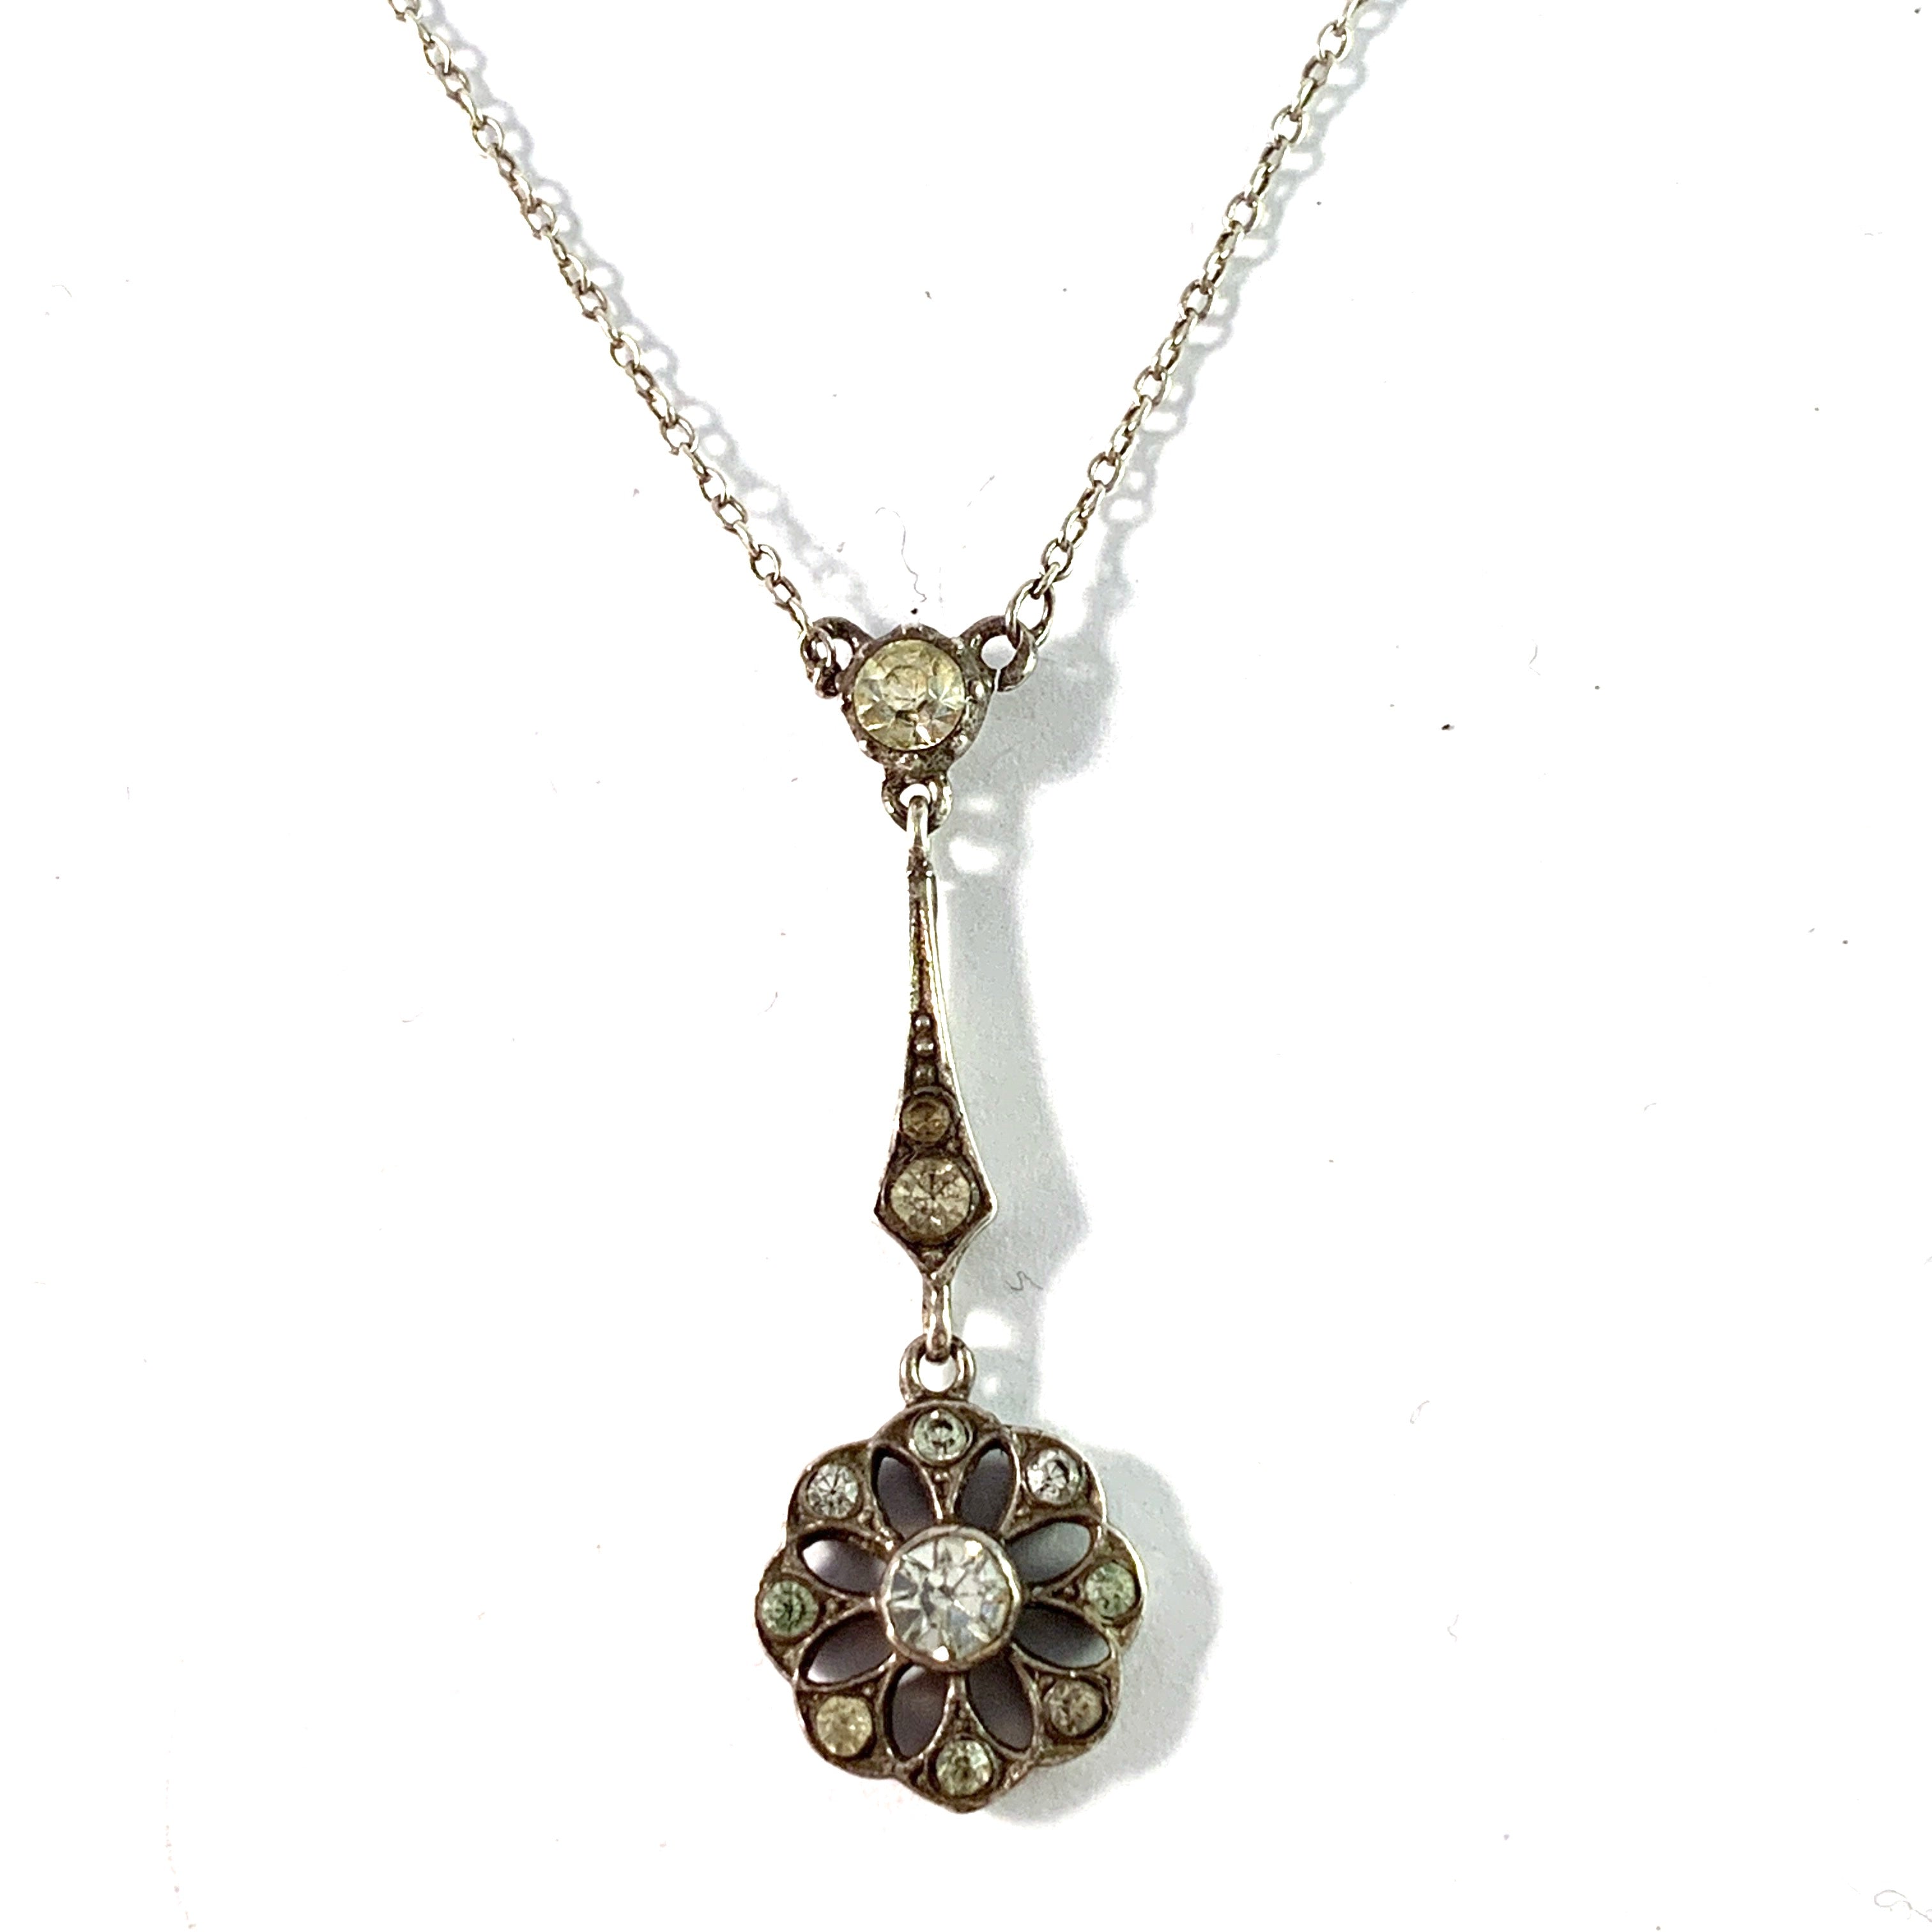 Bremer Silberwarenfabrik, Germany c 1920-30s. Solid 830 Silver Paste Stone Pendant Necklace.